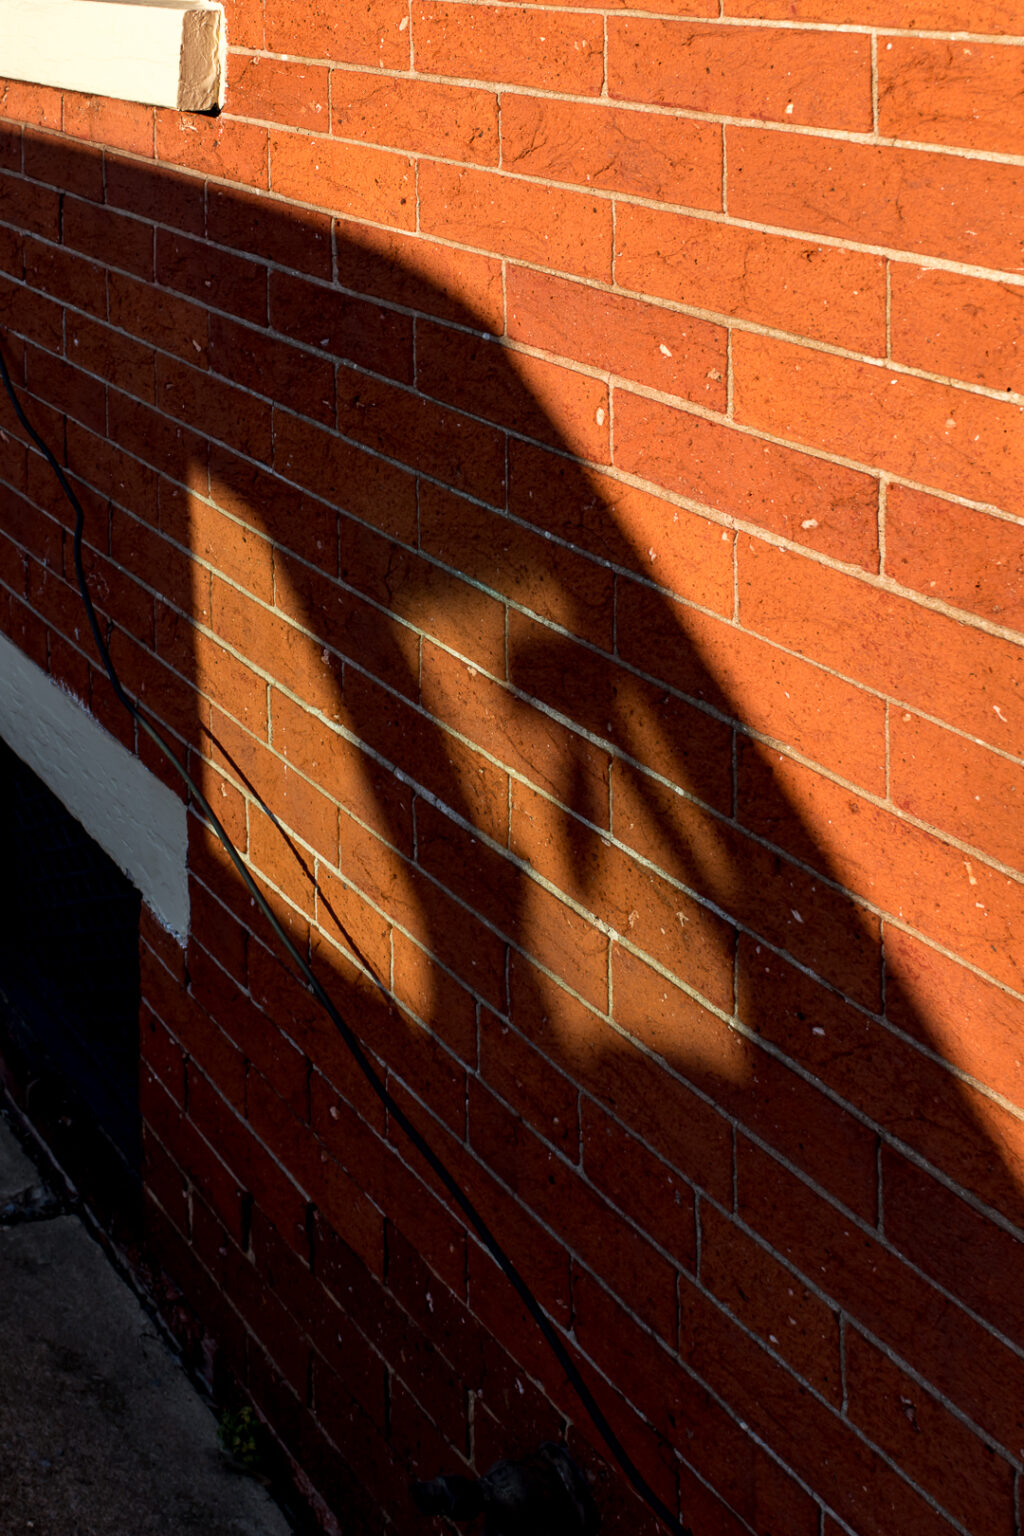 Photograph of a car shadow